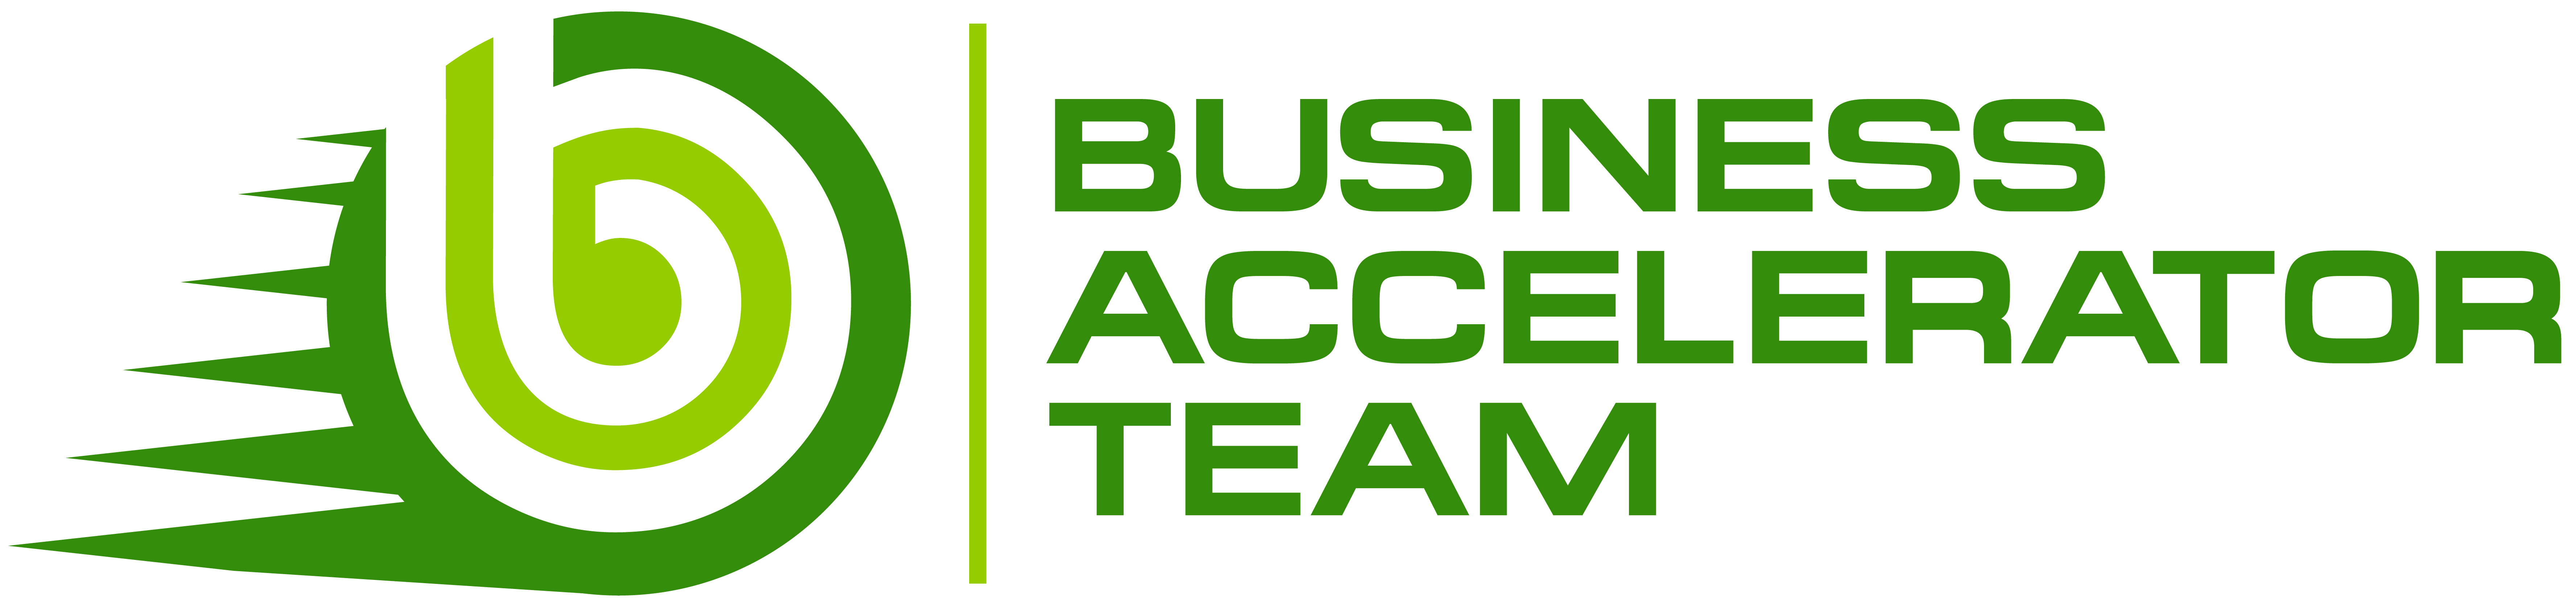 Business Accelerator Team Logo